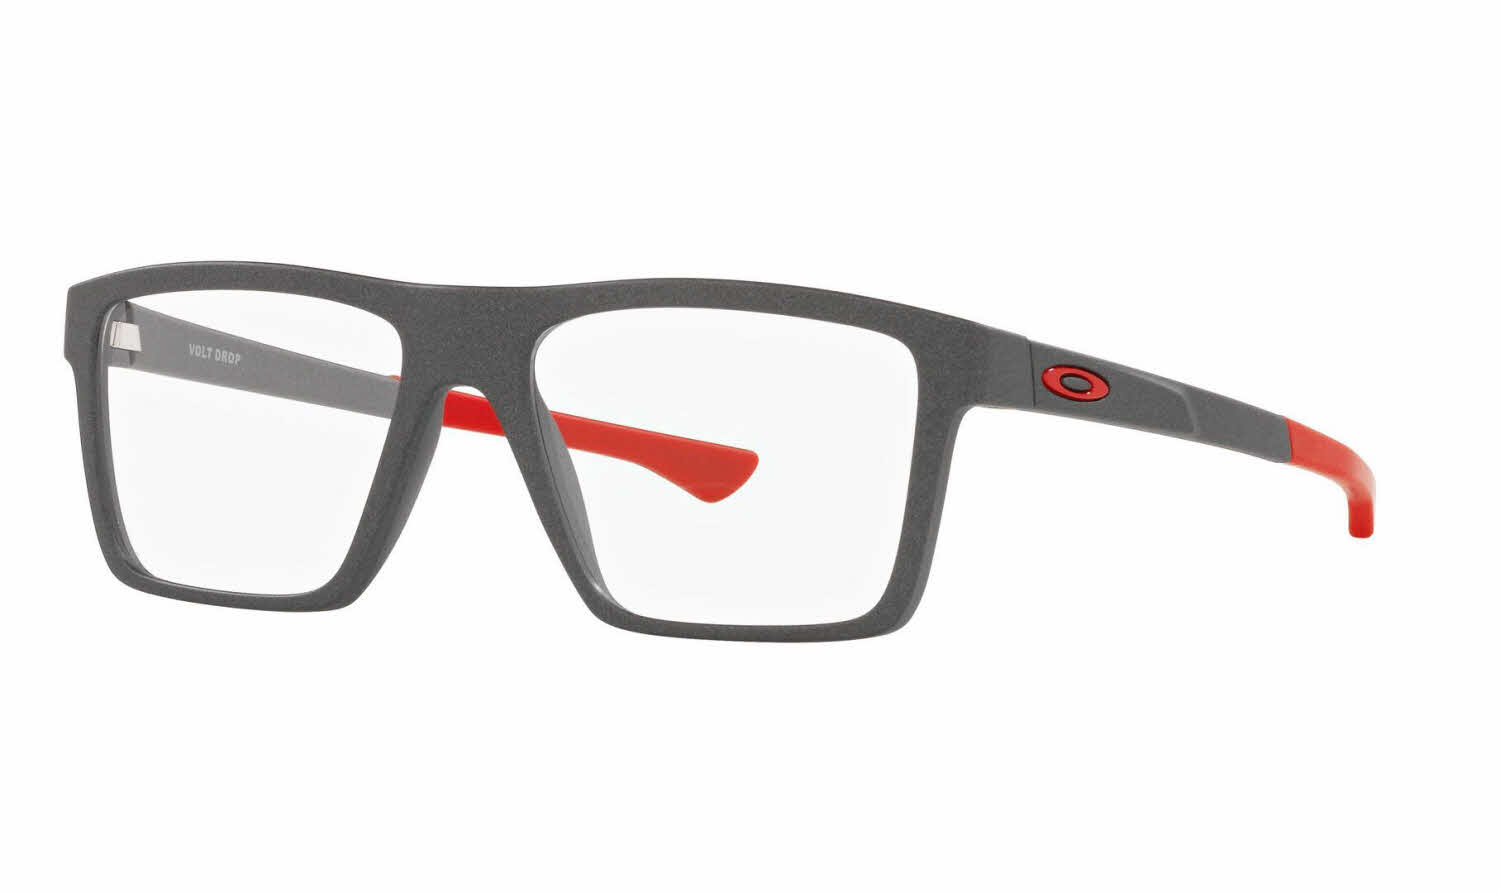 Oakley Volt Drop Eyeglasses